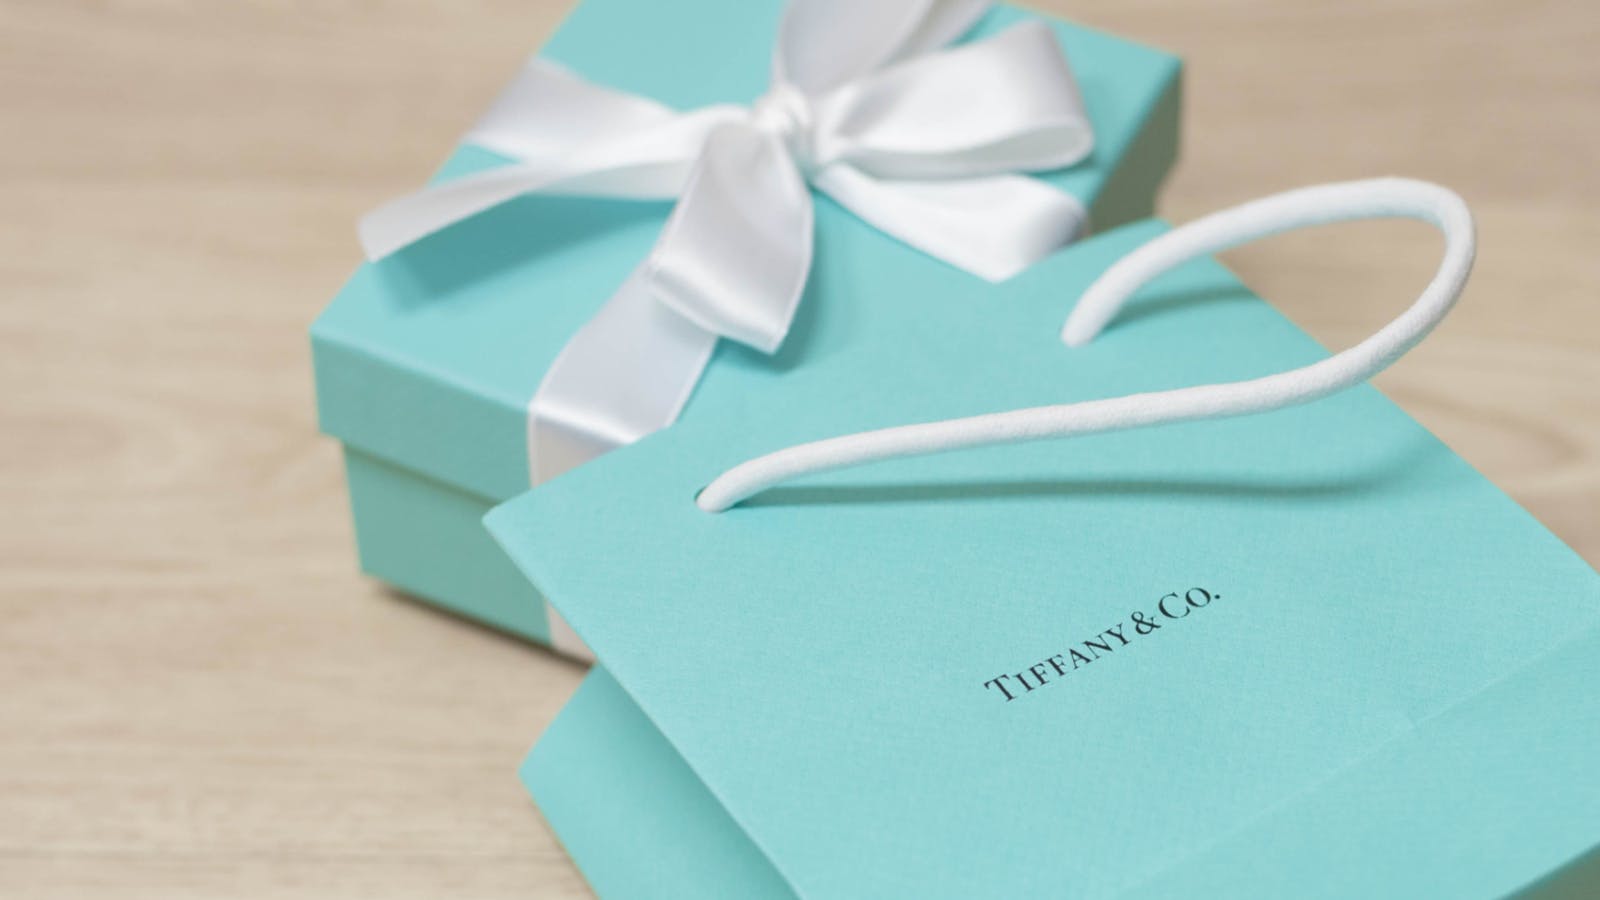 Tiffany & Co. Turns CryptoPunks Into $12.5M Luxury Jewelry Sale - Blockworks